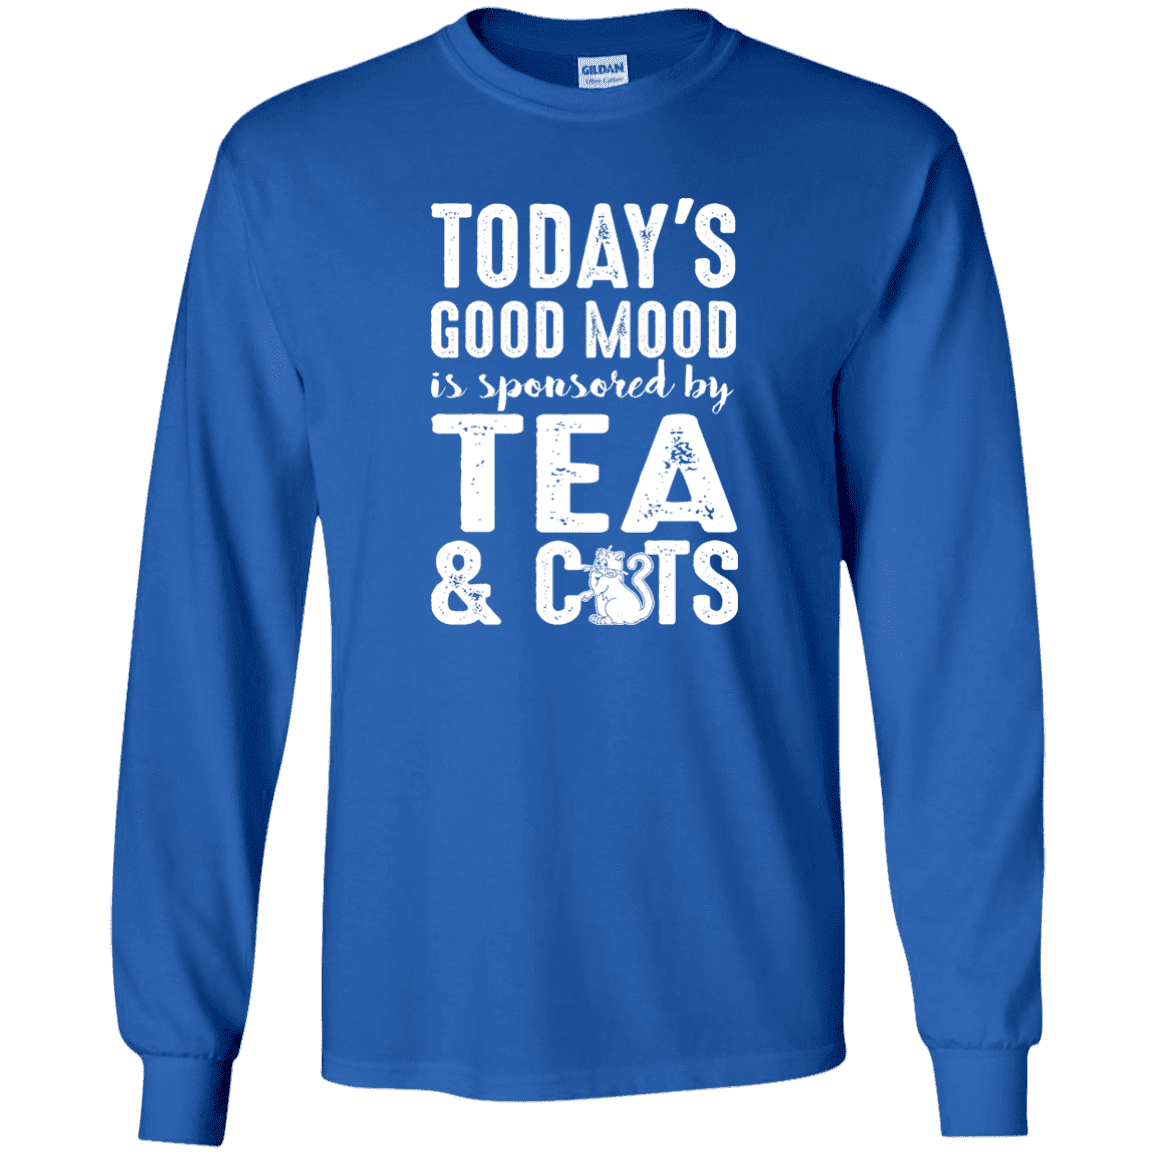 Today's Good Mood Tea & Cats - Long Sleeve T Shirt.